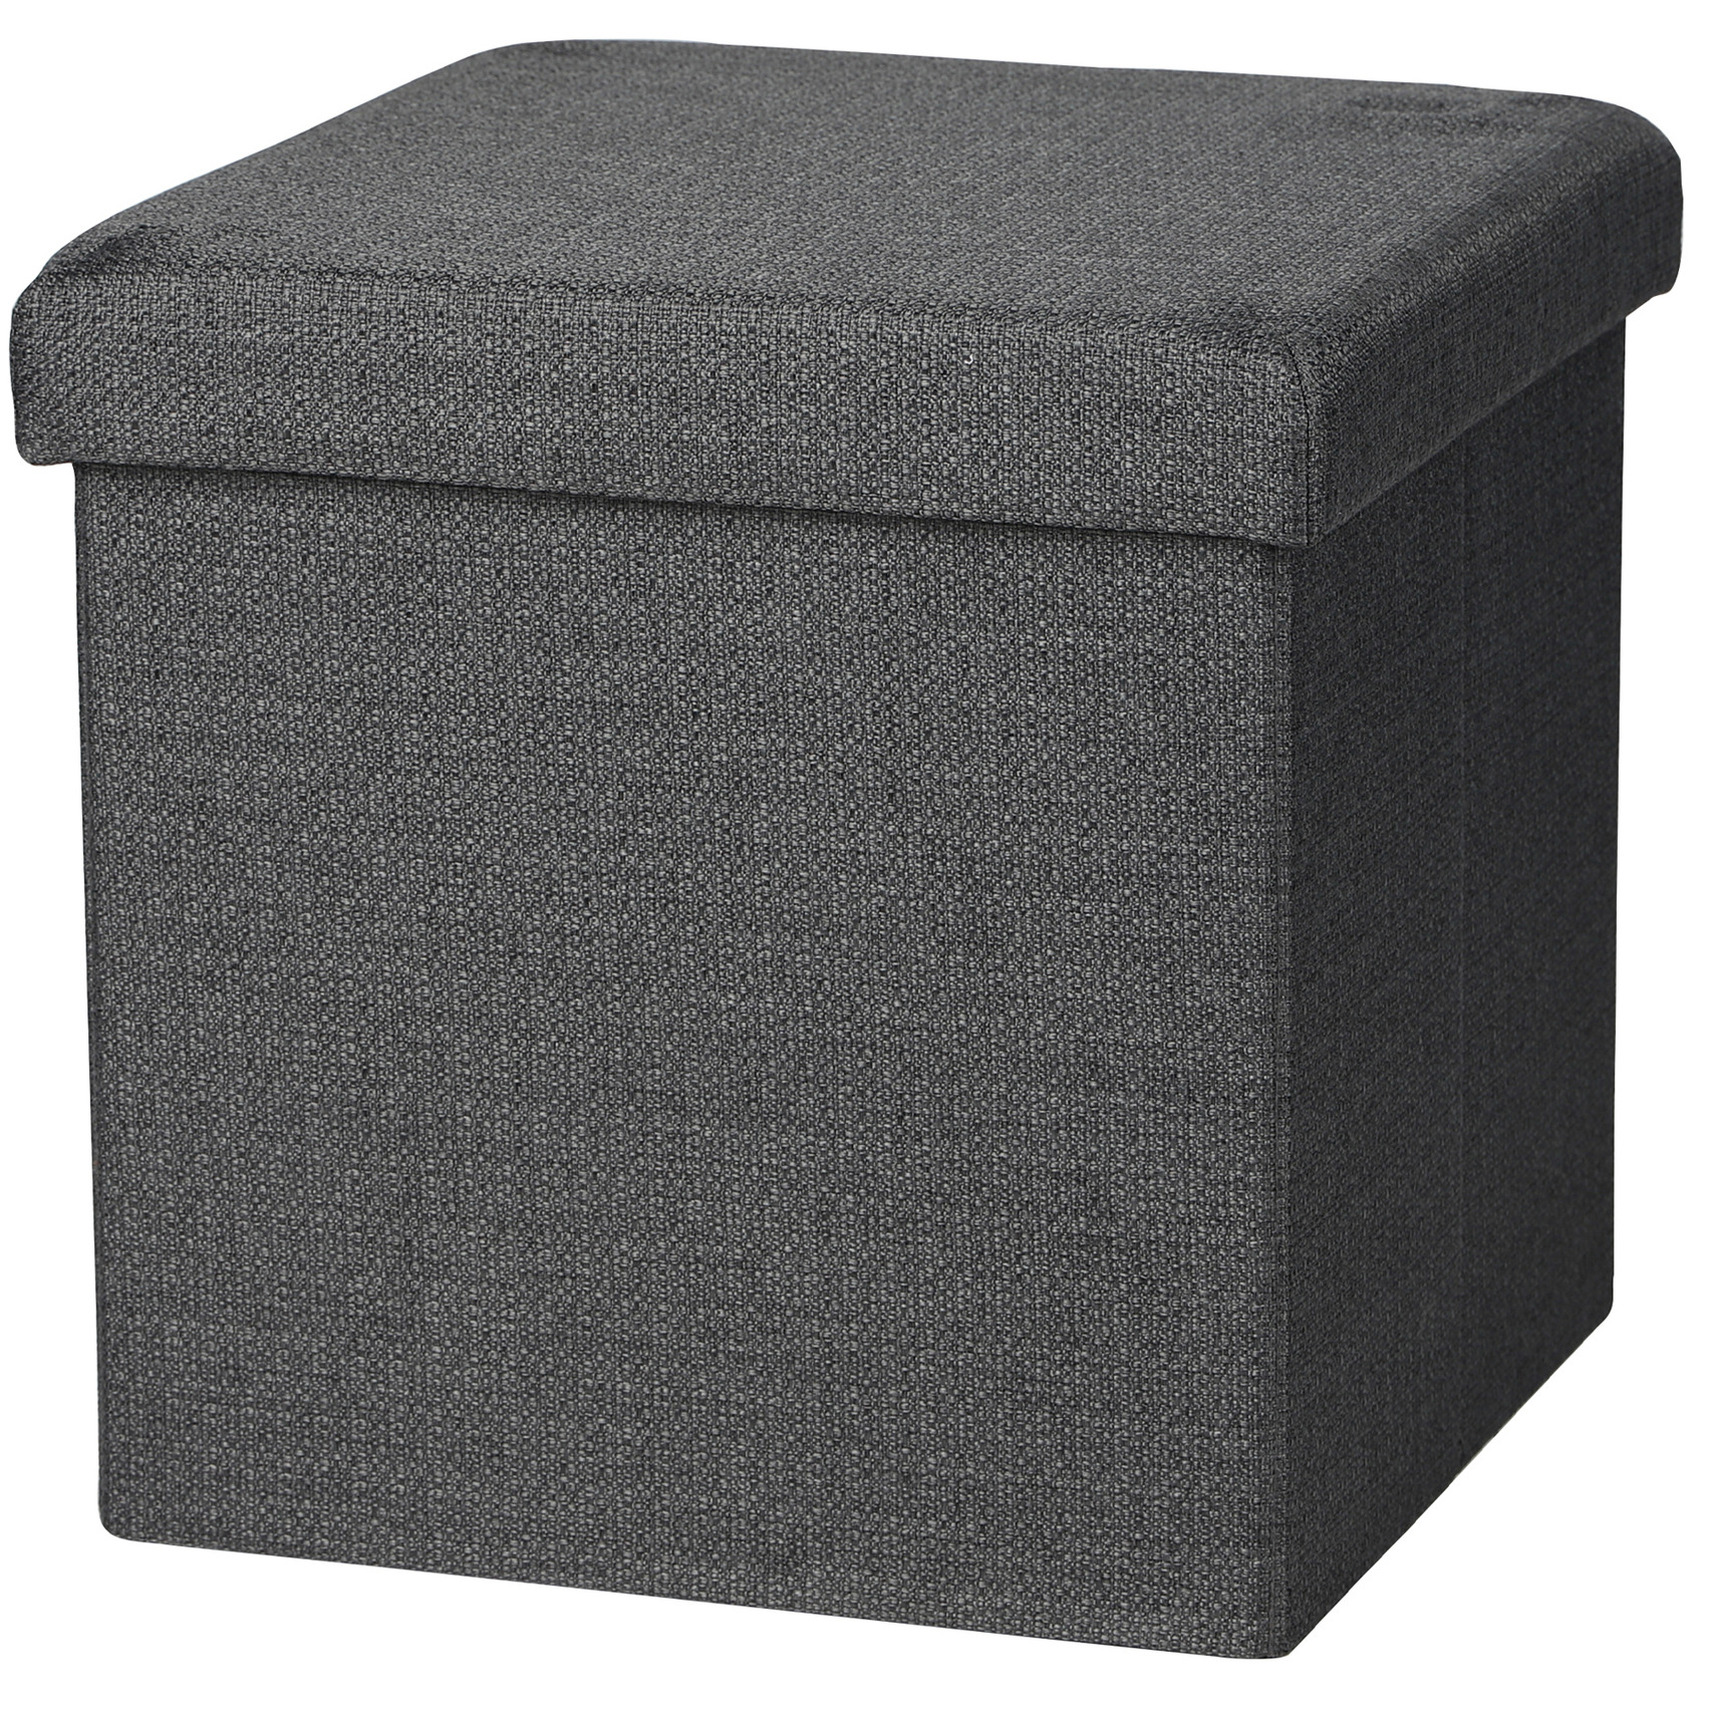 Poef-hocker opbergbox zit krukje donkergrijs polyester-mdf 38 x 38 cm opvouwbaar